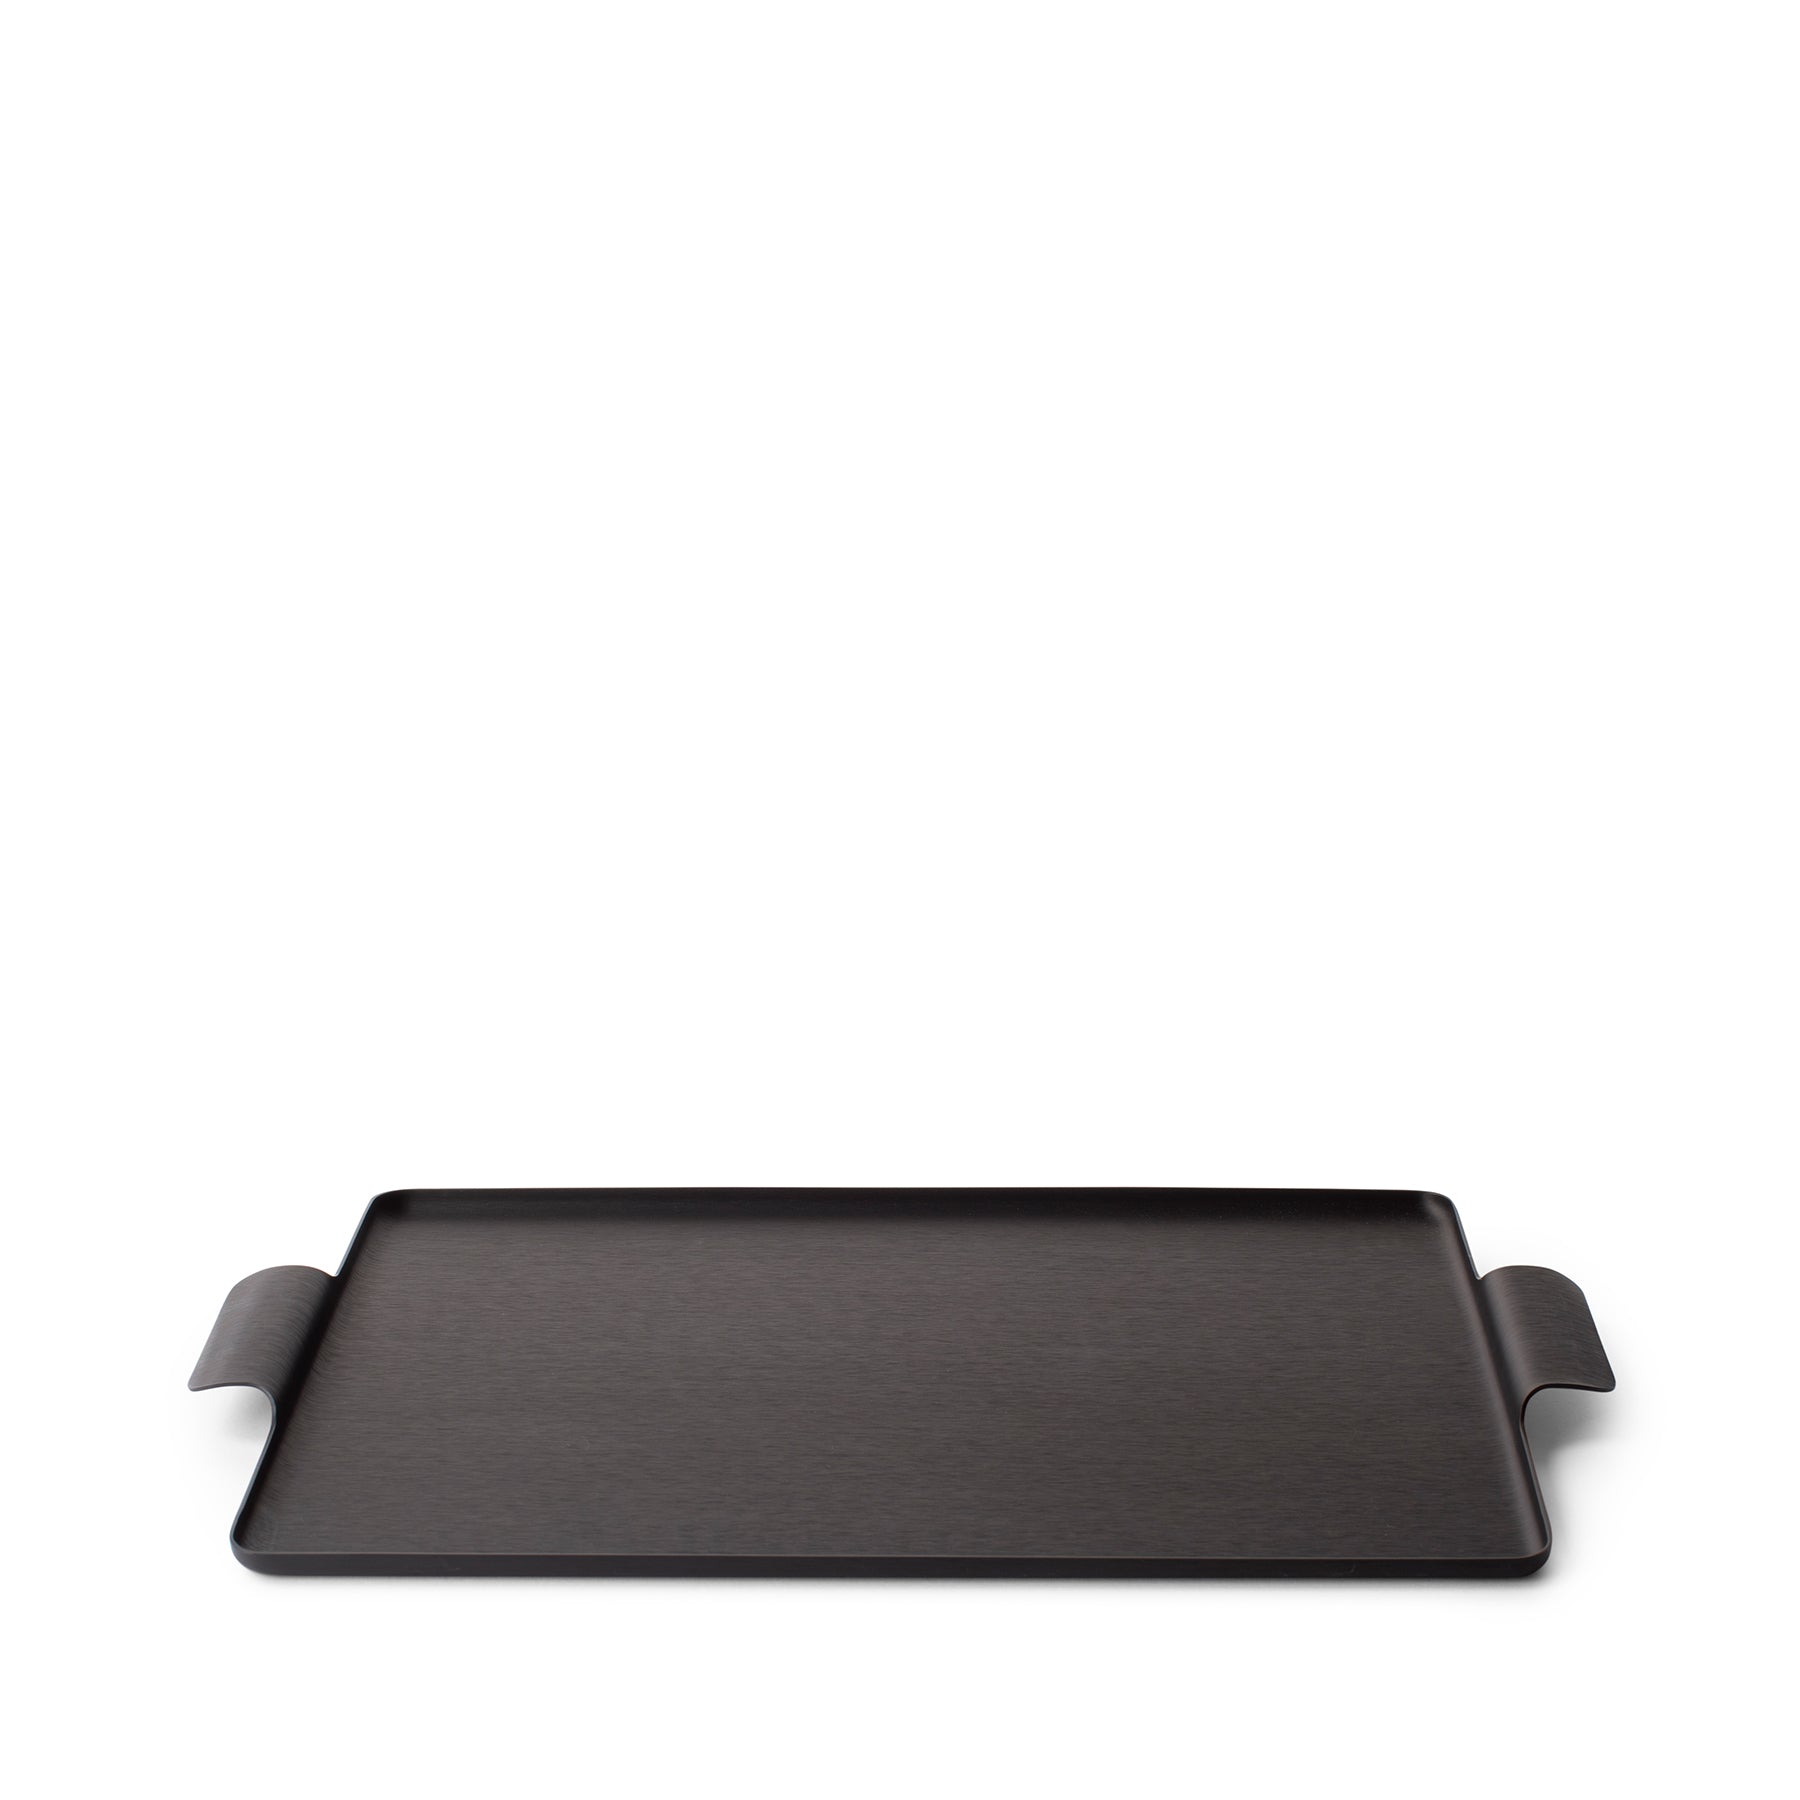 Kaymet Pressed Tray in Black 11 x 14.7 – Heath Ceramics